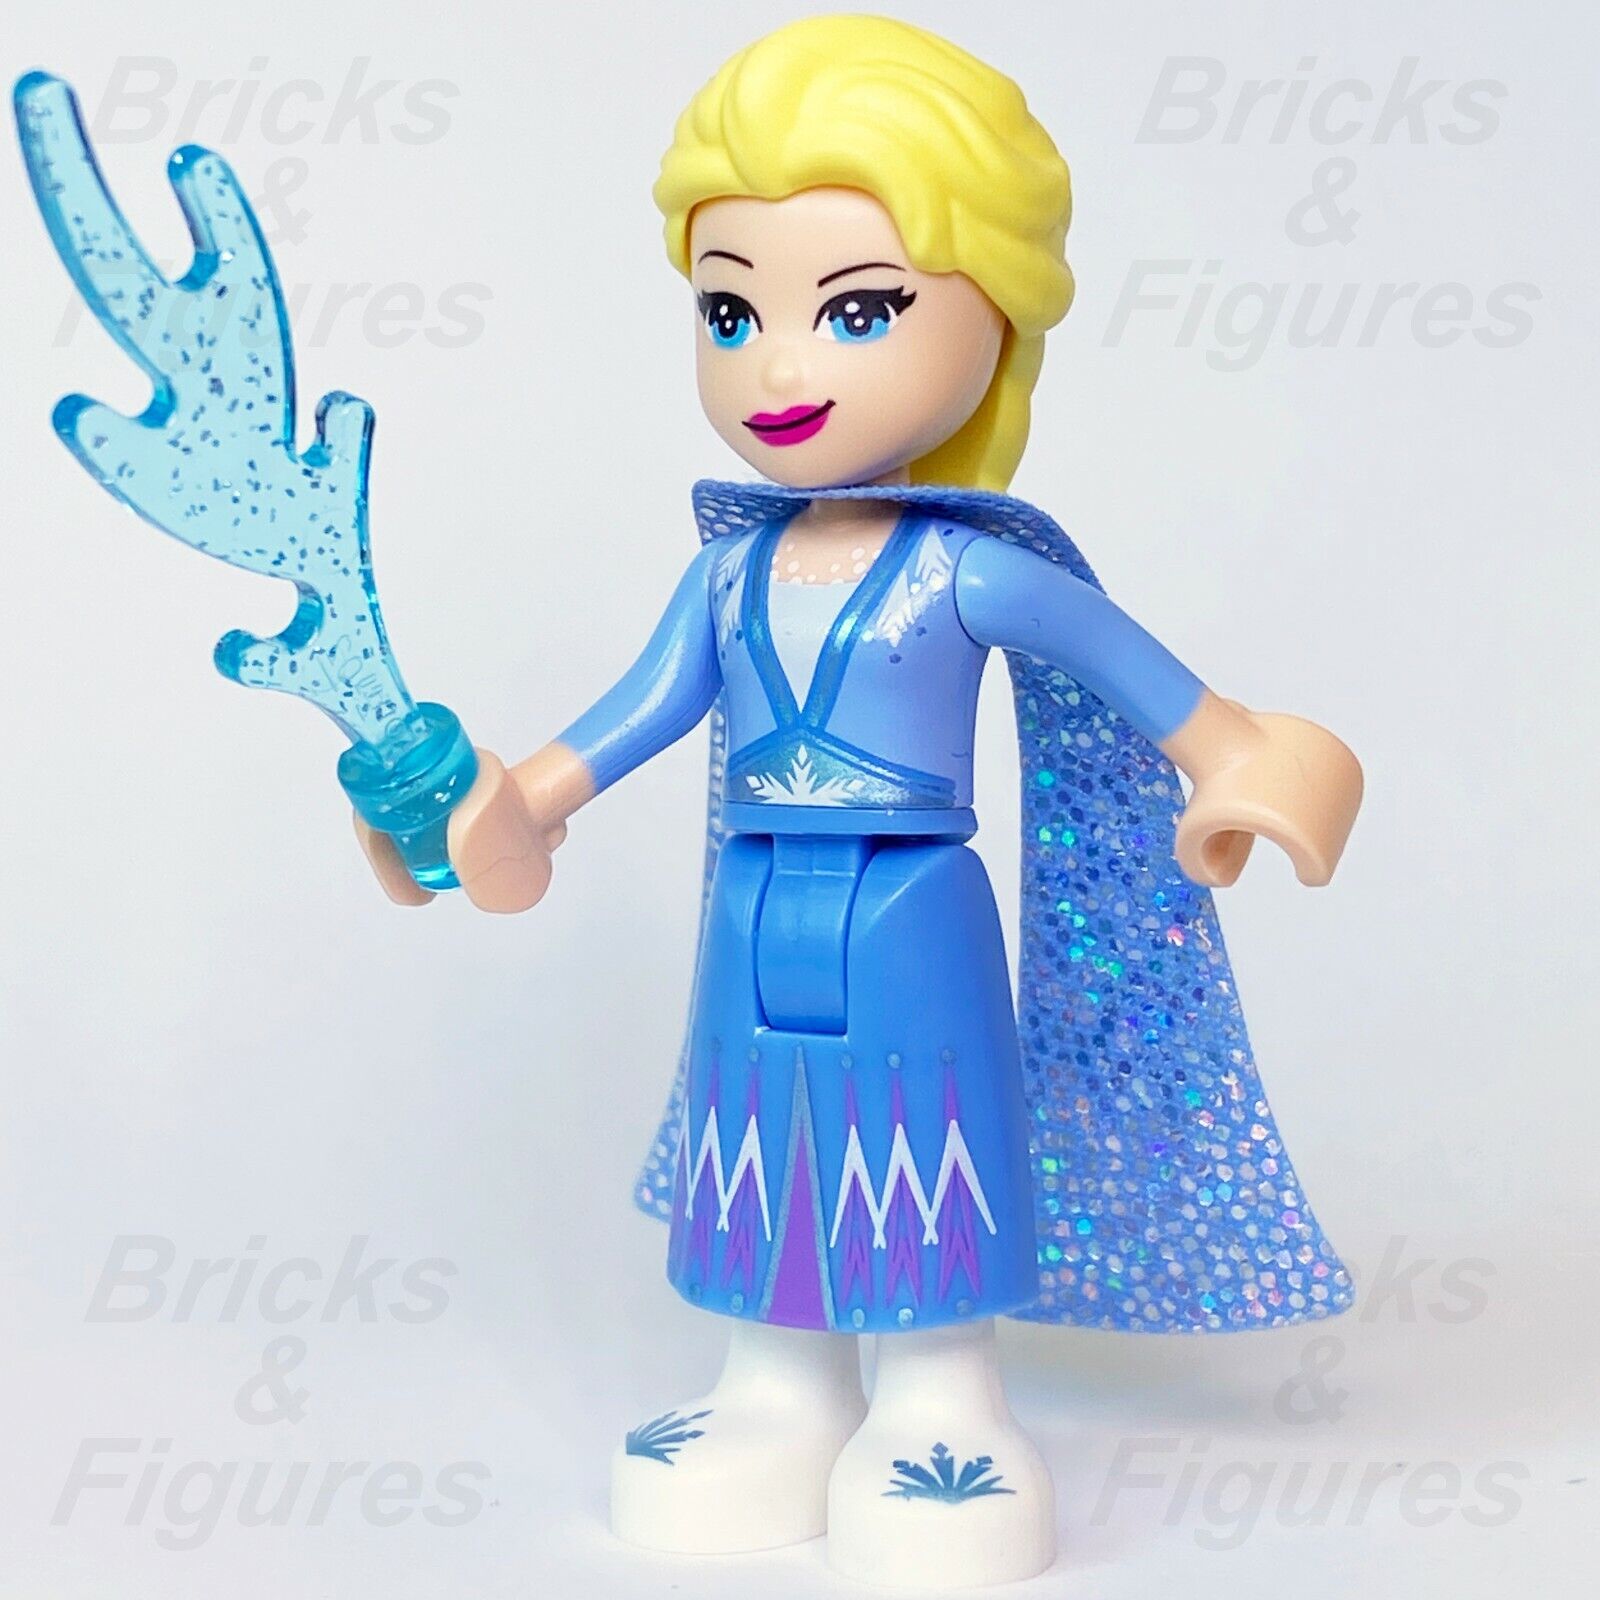 LEGO Disney Frozen 2 Elsa Minifigure w/ Glitter Cape Princess Queen 41168 41166 - Bricks & Figures